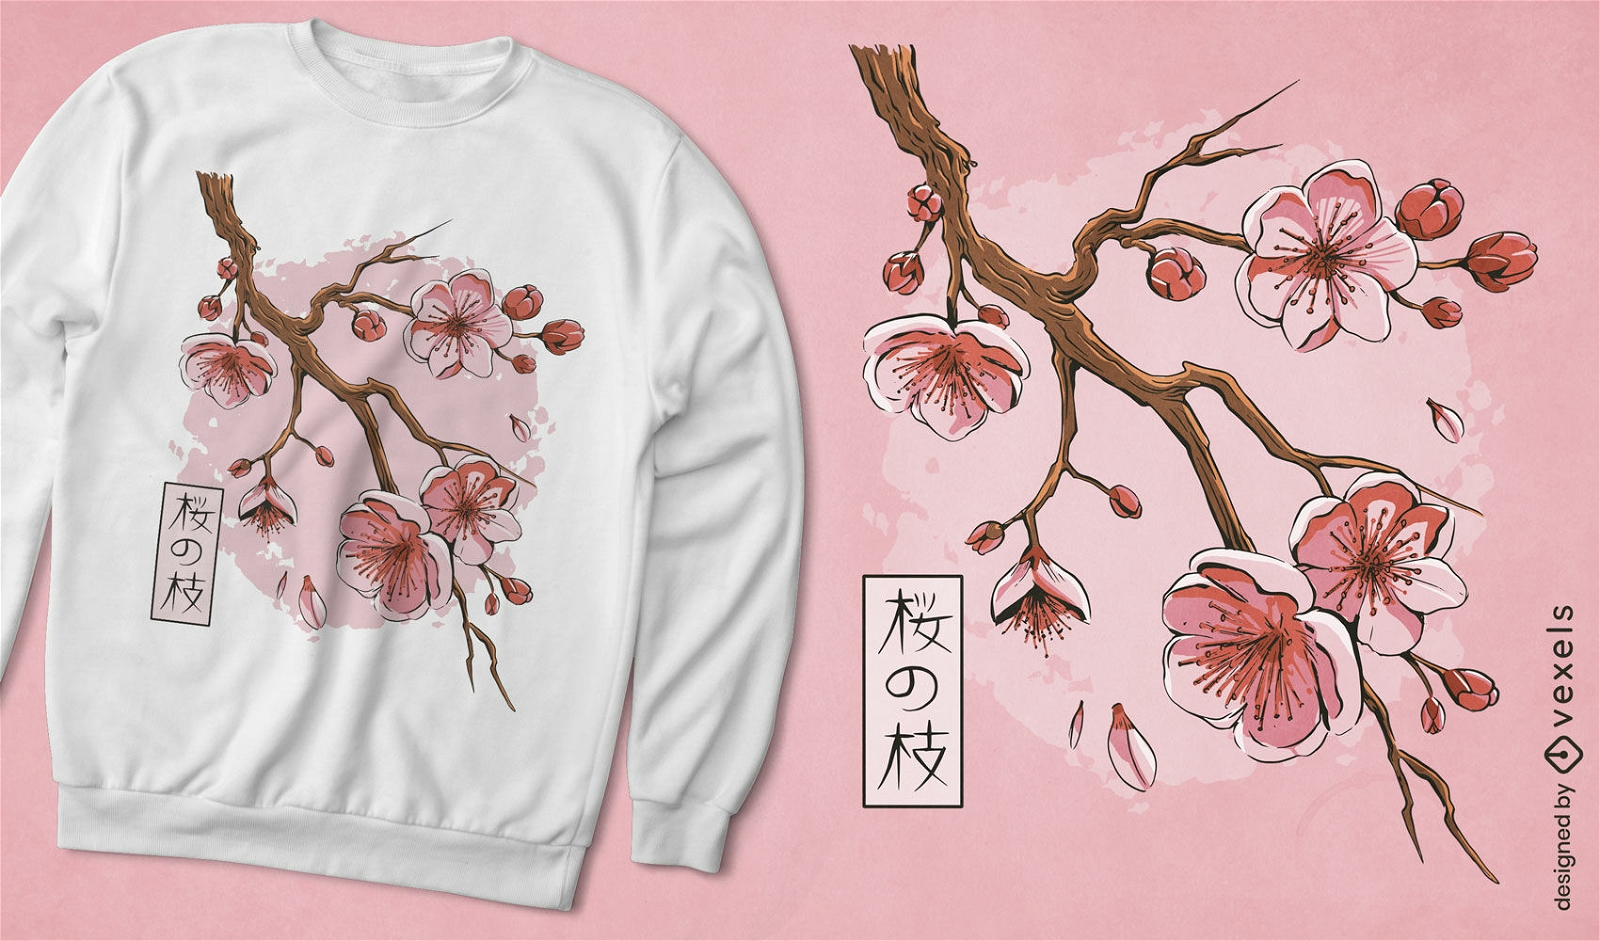 Japanisches T-Shirt-Design des Sakura-Bl?tenbaums